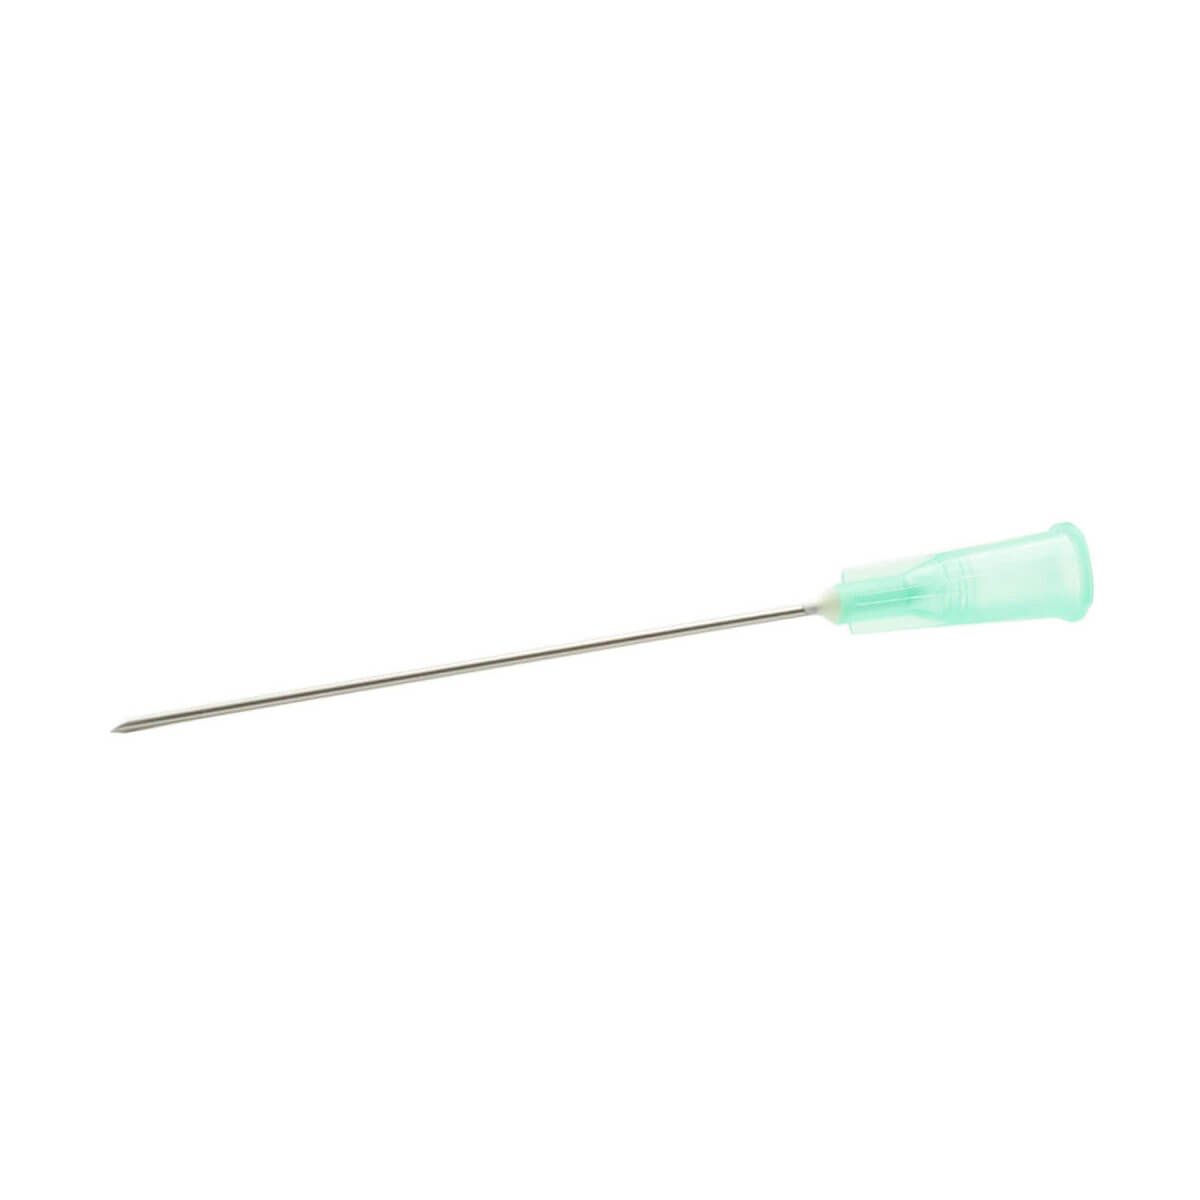 BD Microlance Needle Green 21G 50MM